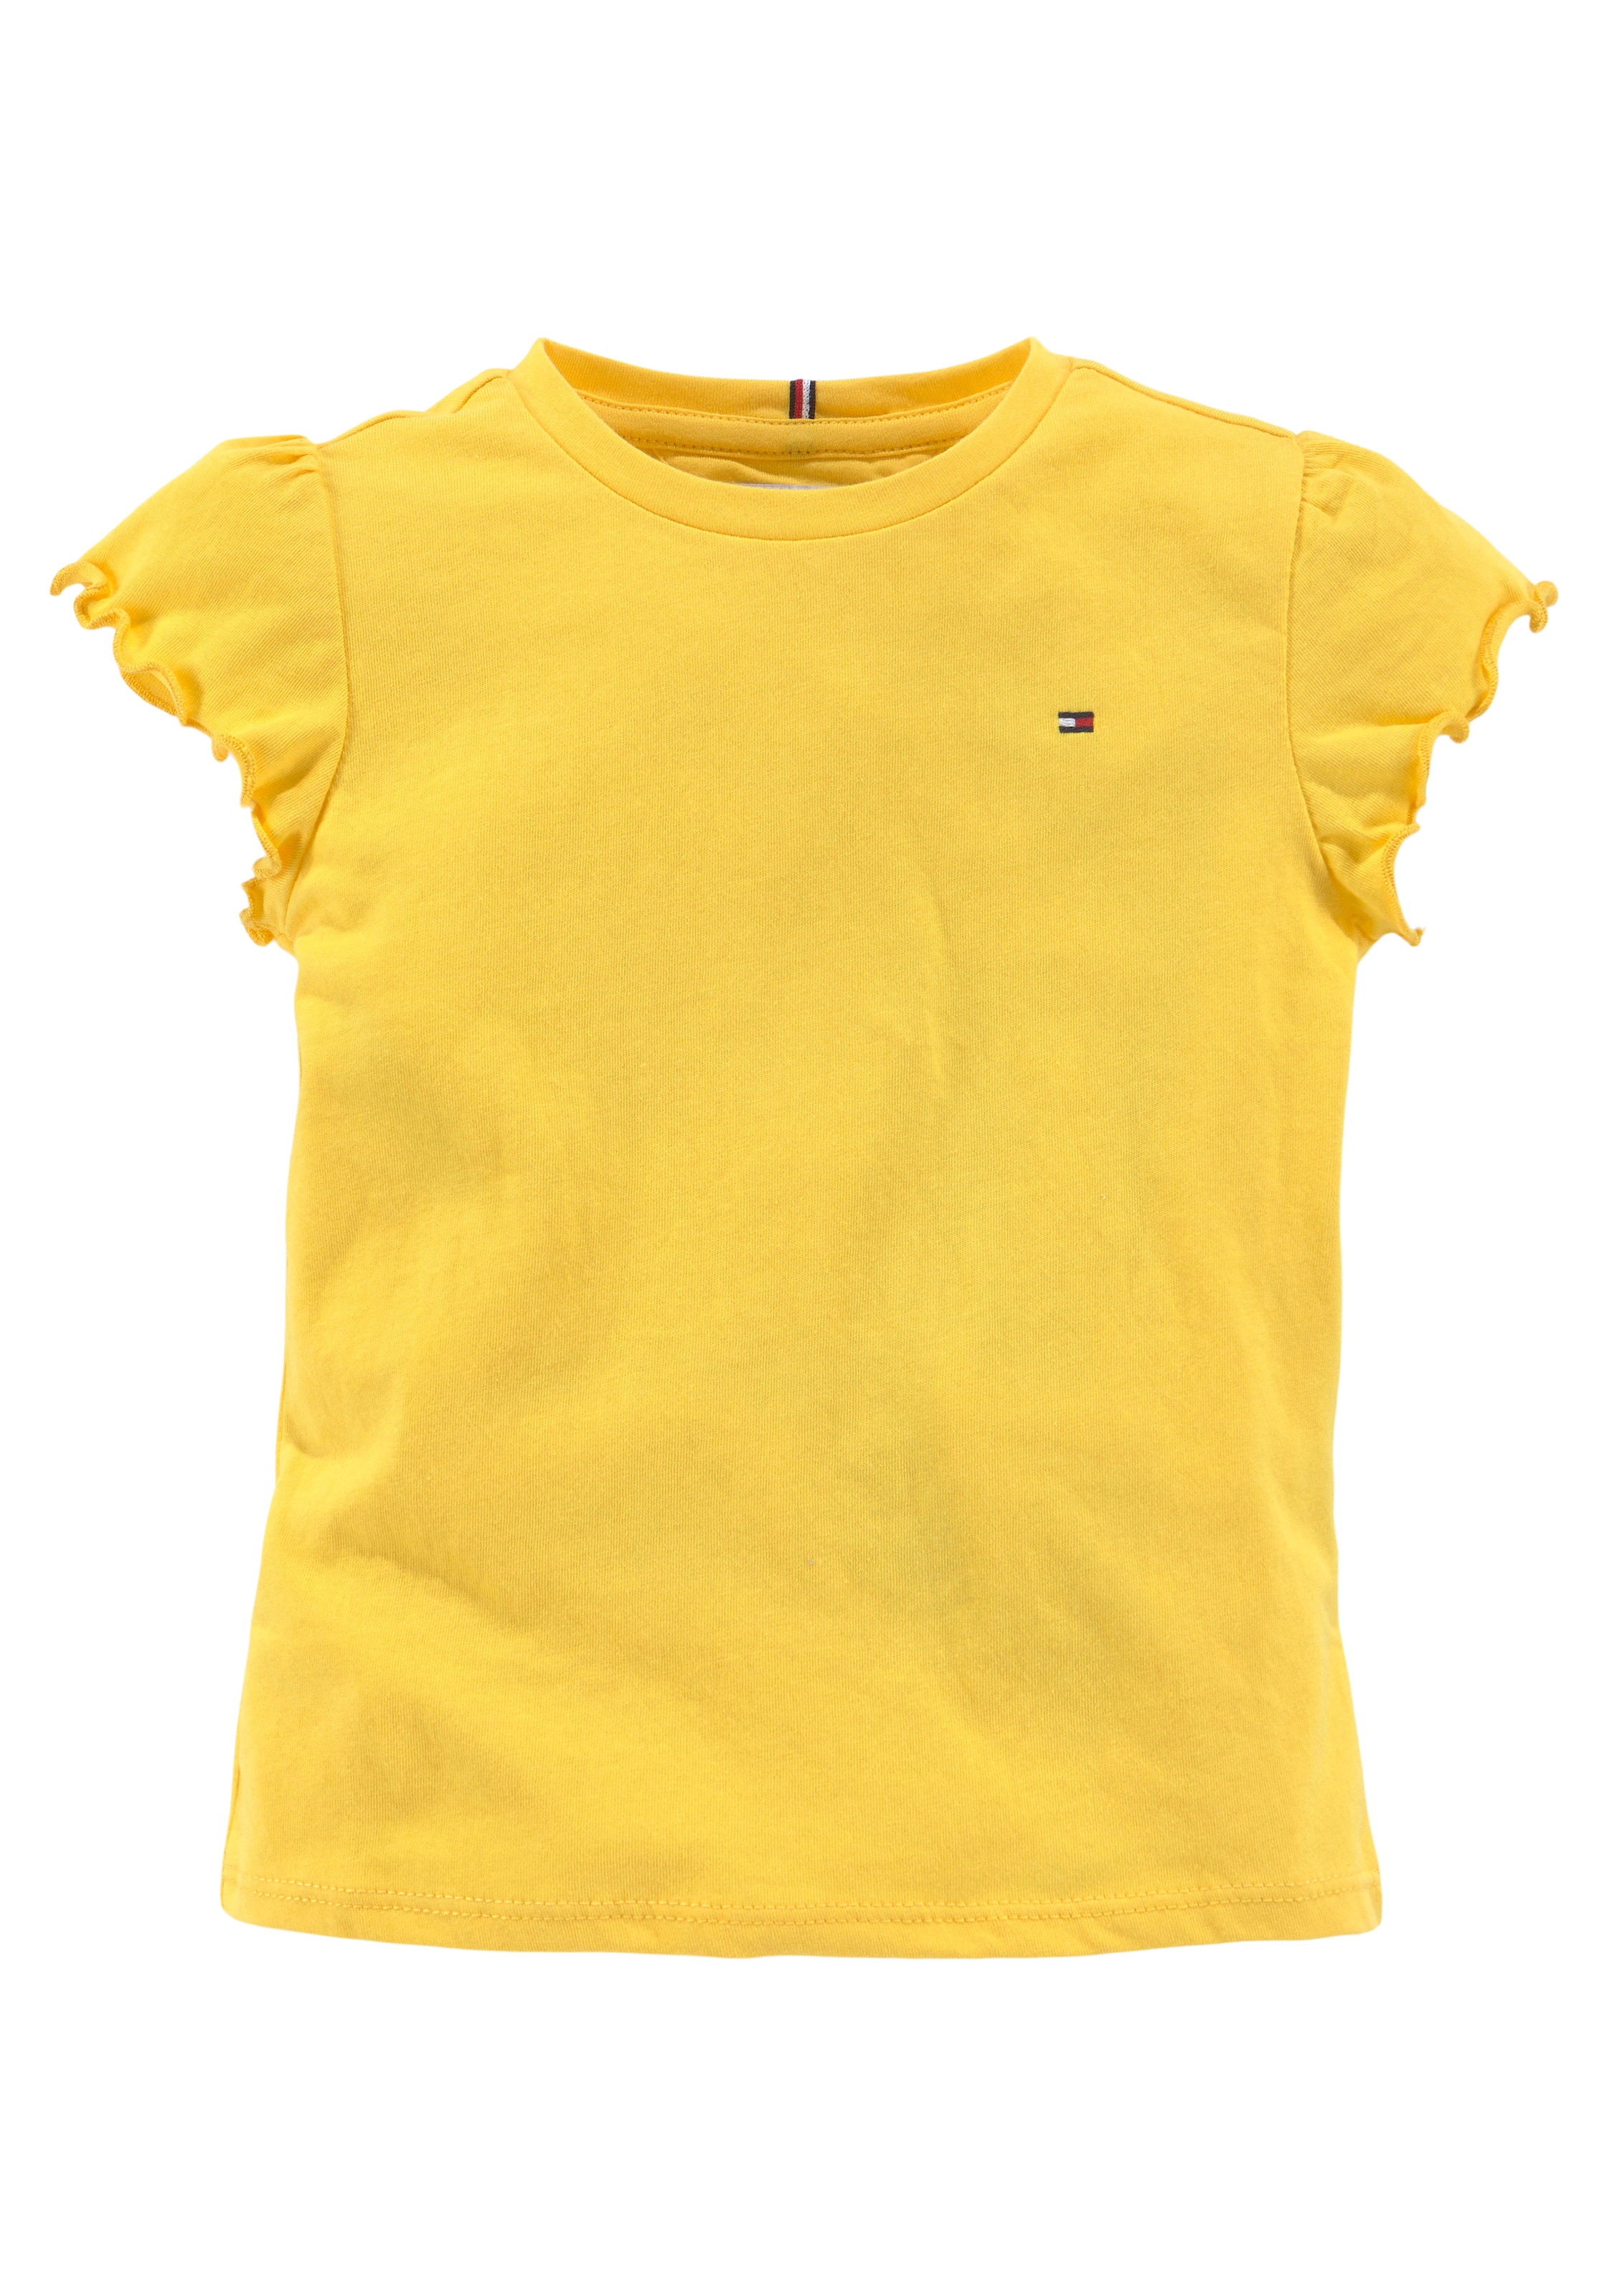 Label RUFFLE SLEEVE Kids Junior Tommy T-Shirt MiniMe,mit bei TOP dezentem Hilfiger ♕ Kinder »ESSENTIAL S/S«,